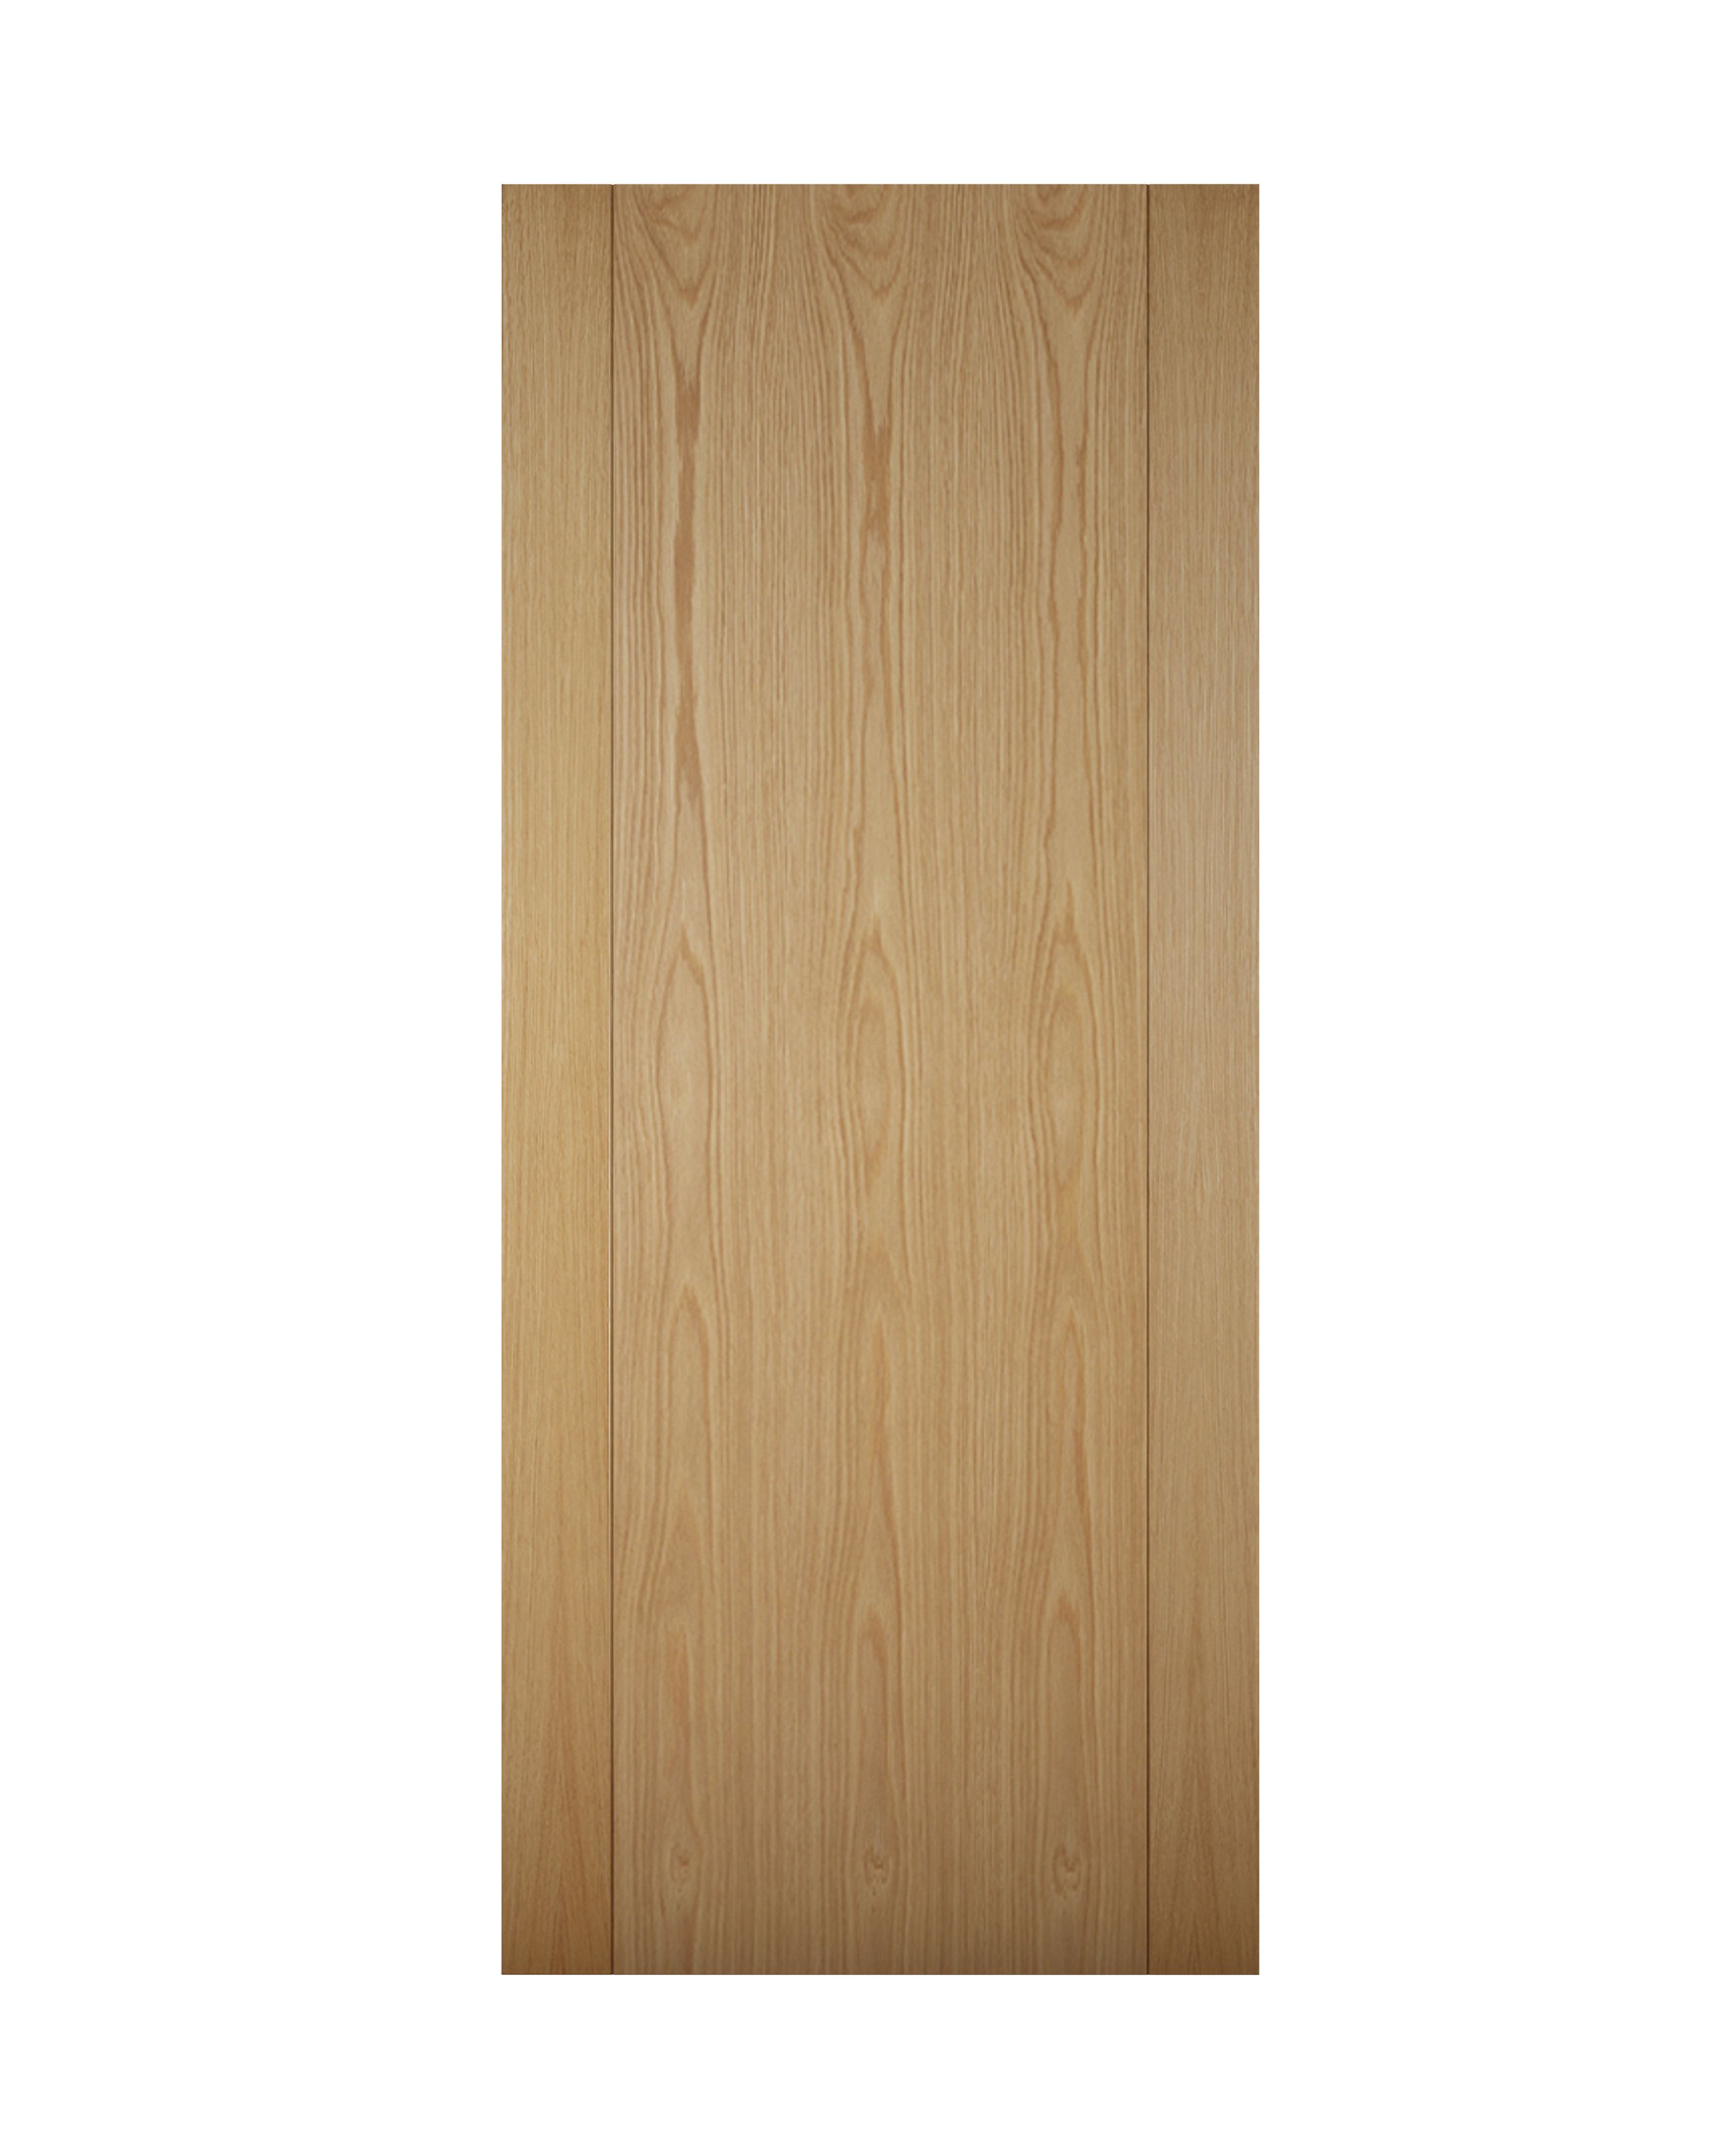 Veneered White oak veneer Front door & frame with letter plate, (H)2074mm (W)856mm